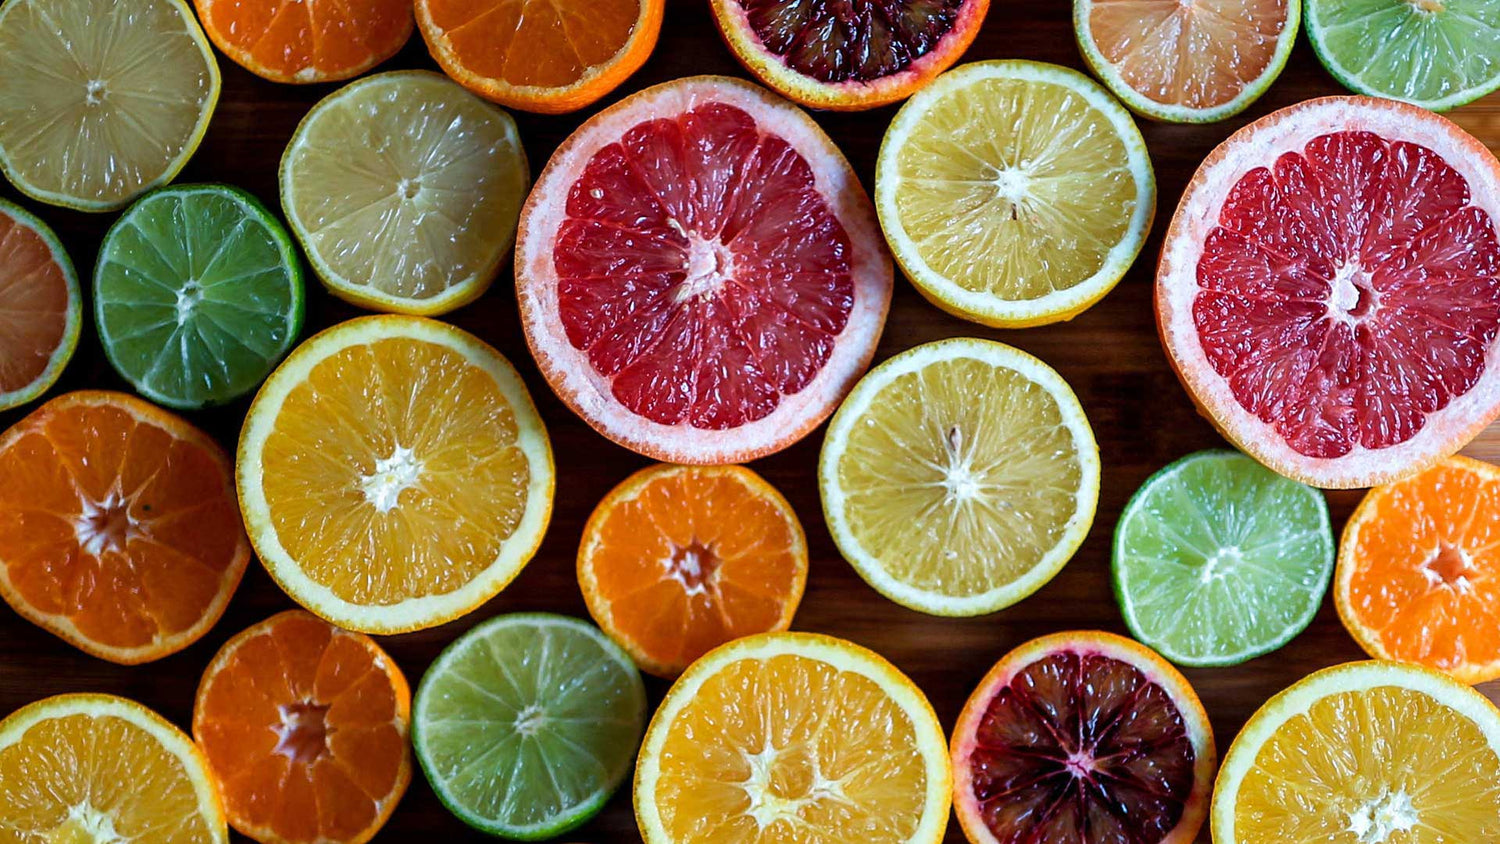 Oranges, lemons, grapefruits, limes 